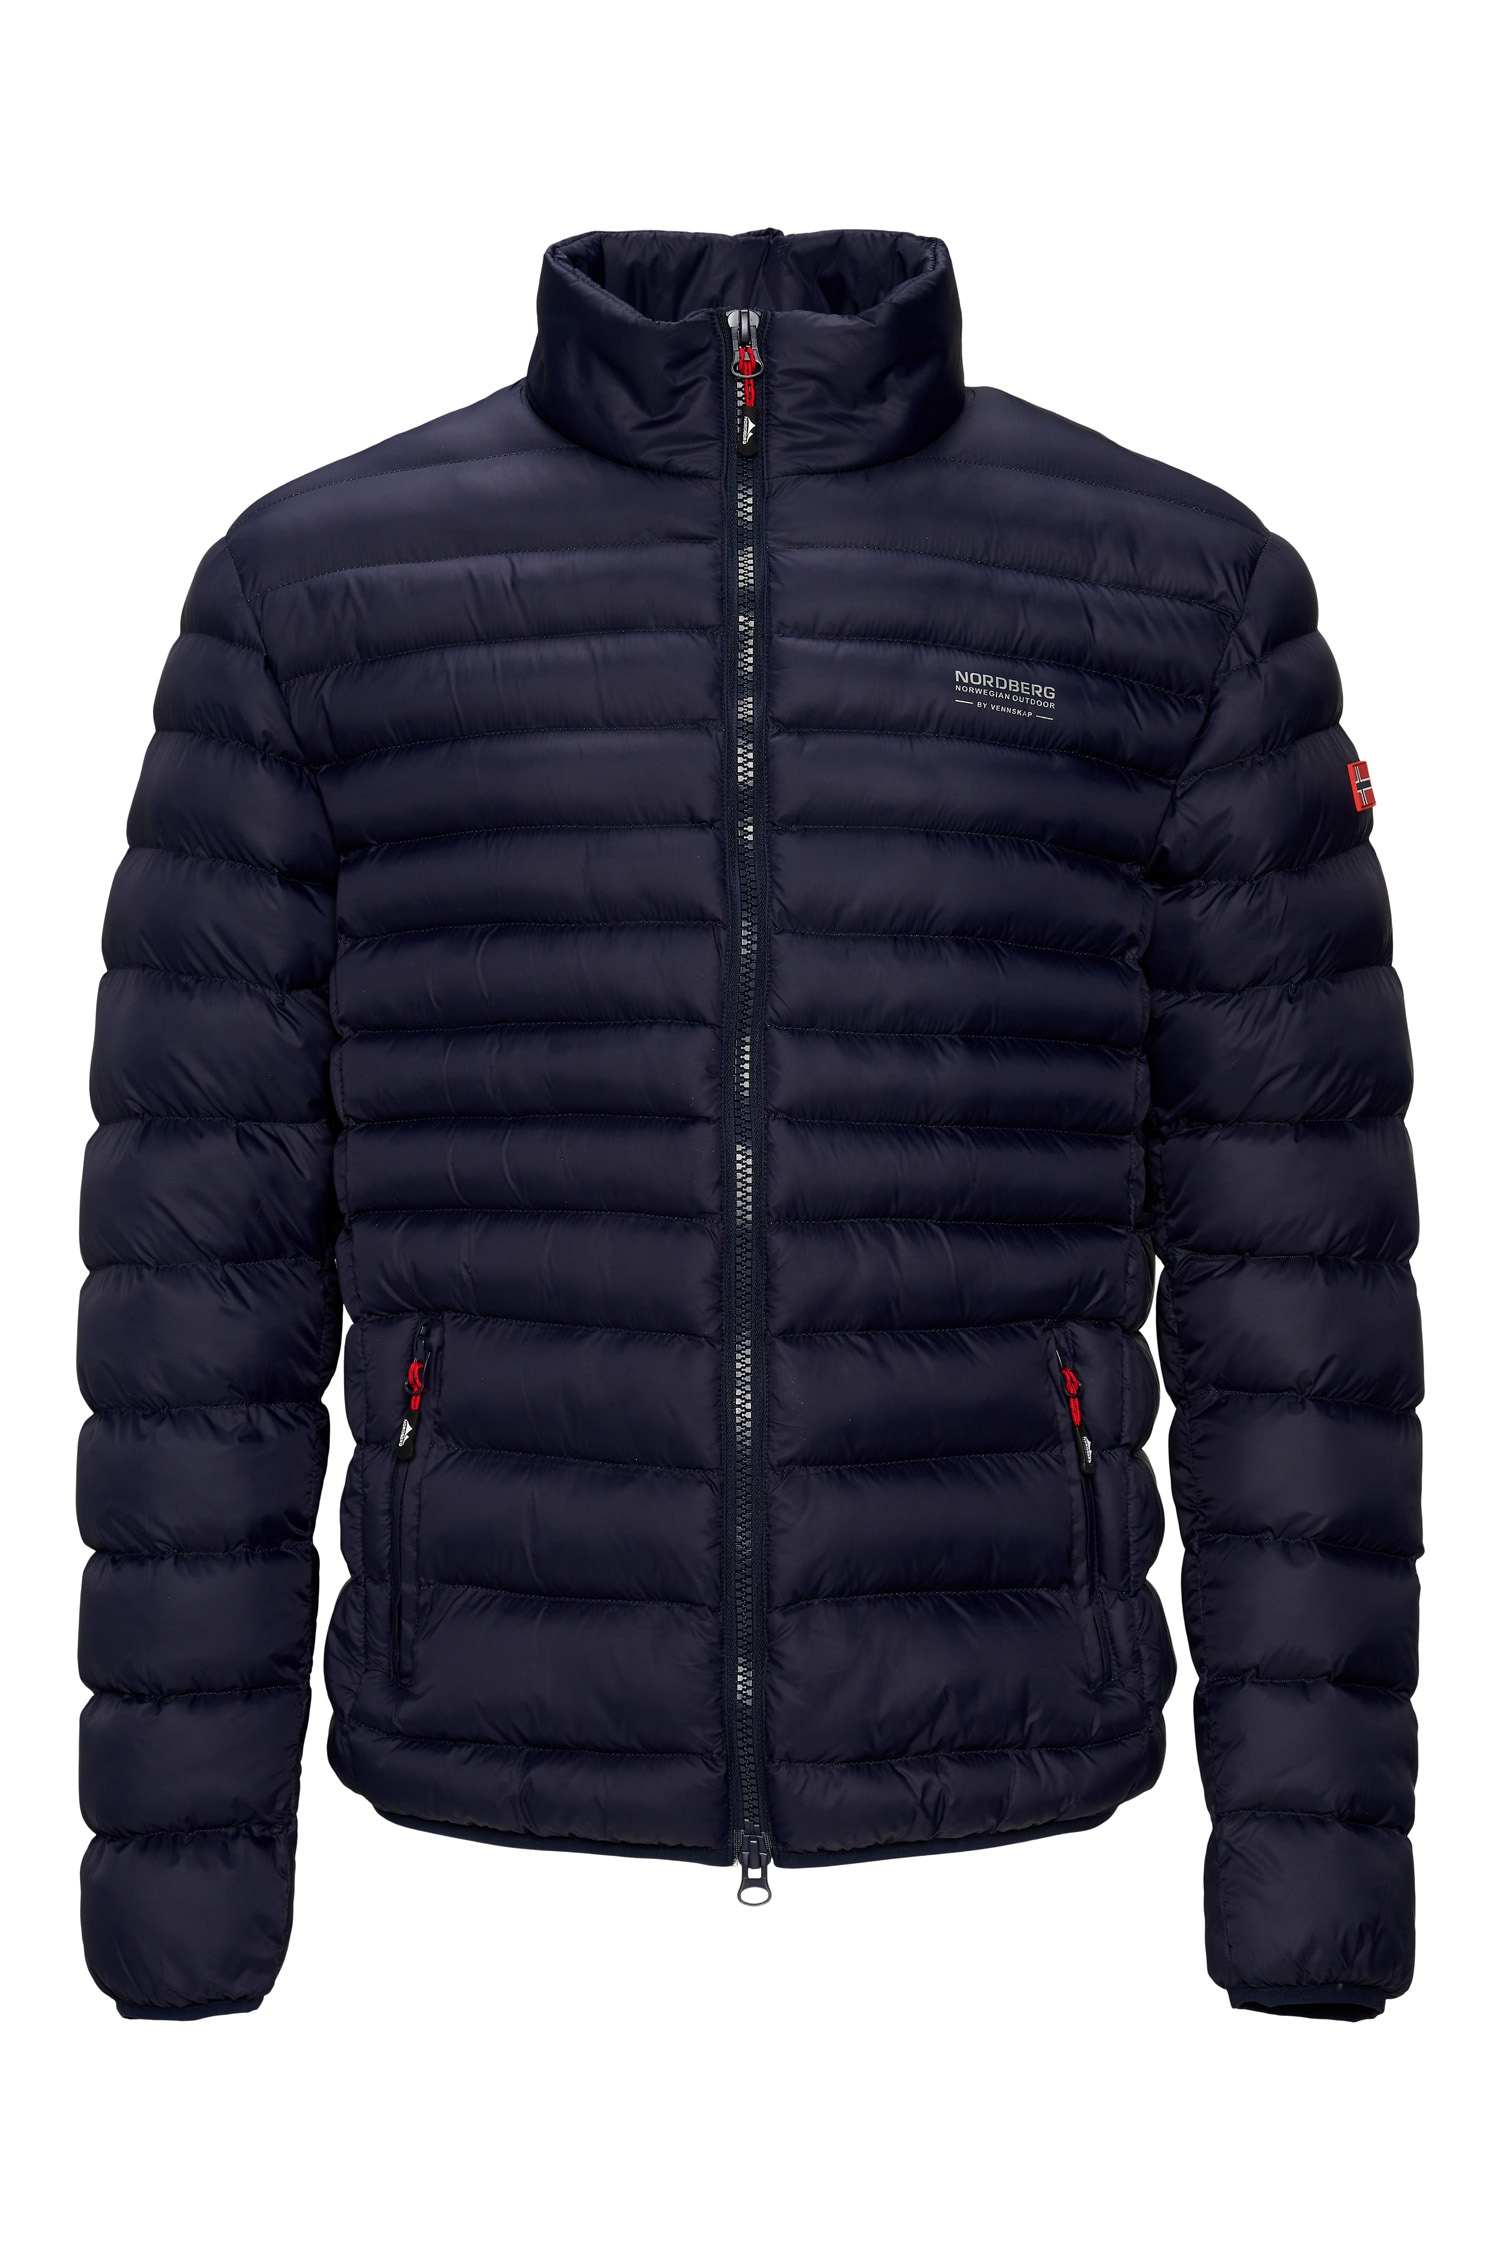 Tharn Men's puffy jacket Navy - Nordberg Outdoor